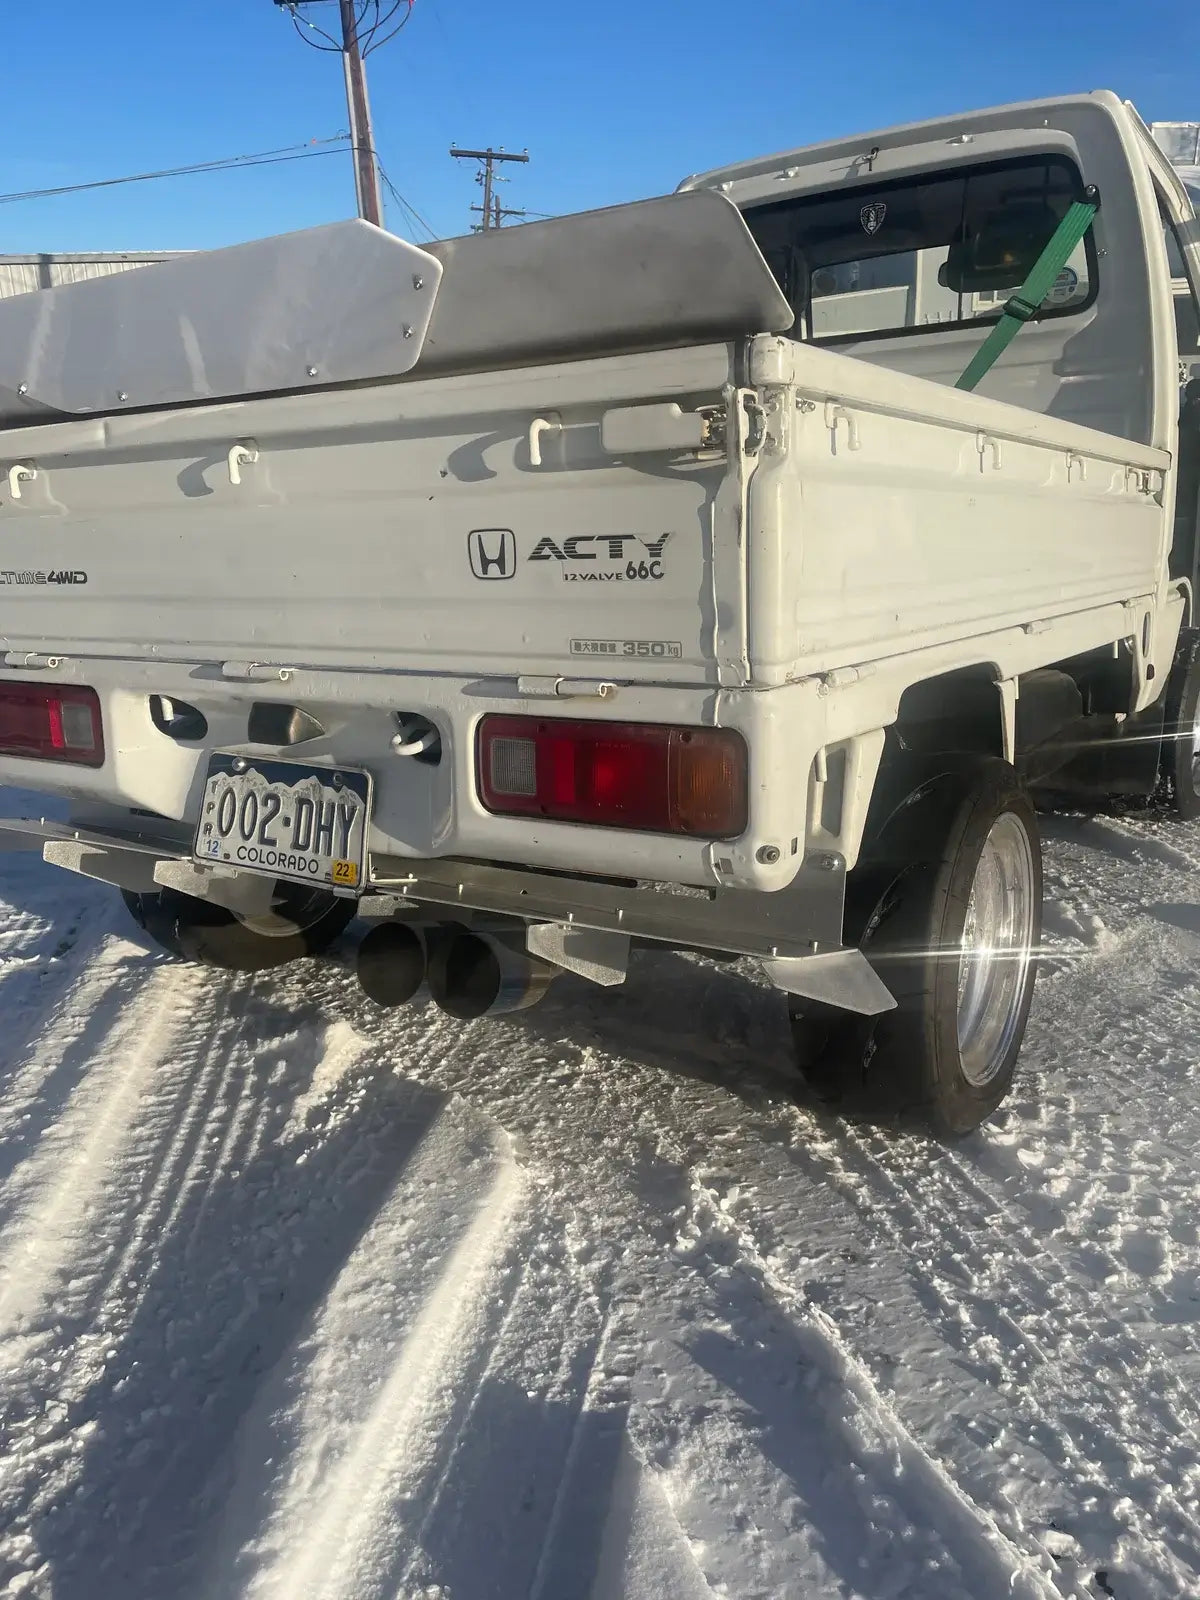 Rear Diffuser - Honda Acty Truck - HA3, HA4 Models - 1990-1999